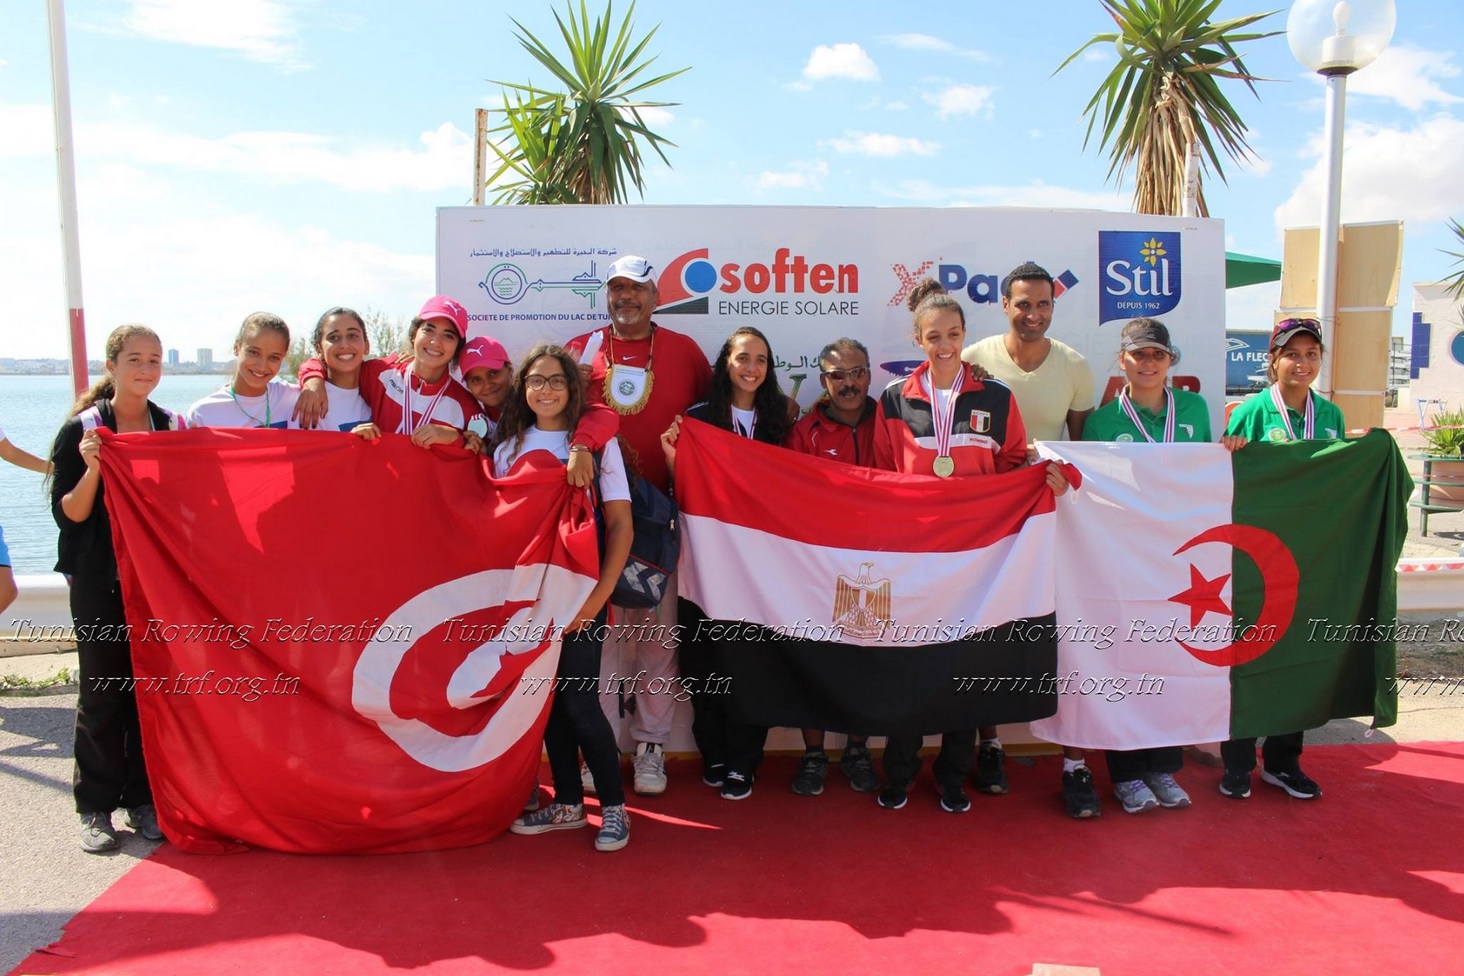 Tunisian Rowing Federation/FACEBOOK)